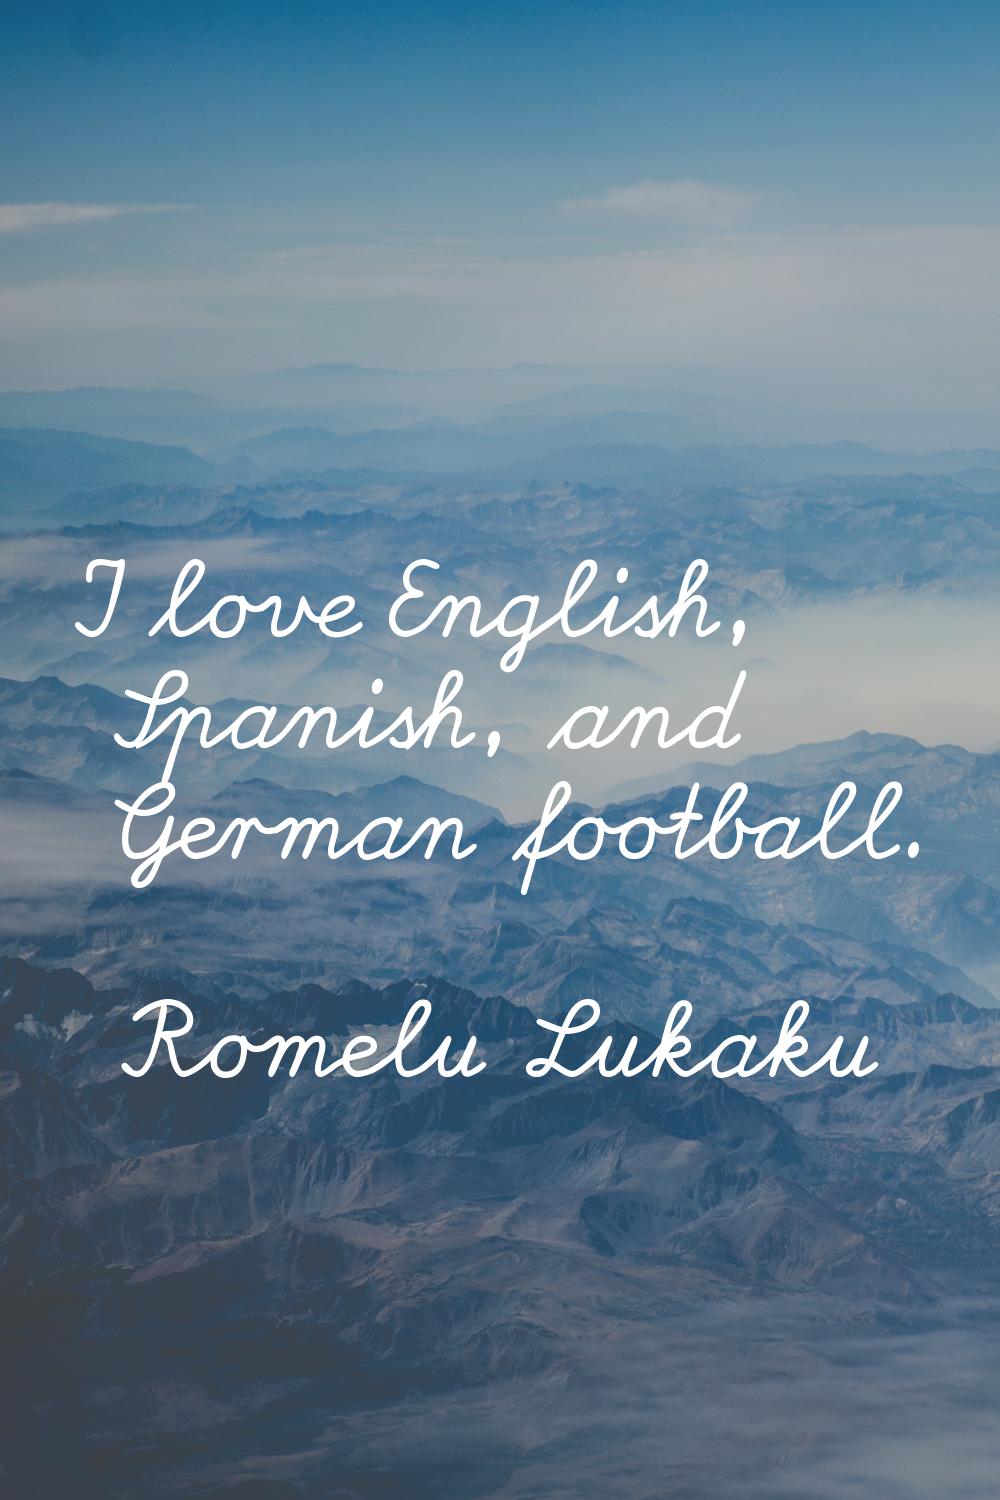 I love English, Spanish, and German football.